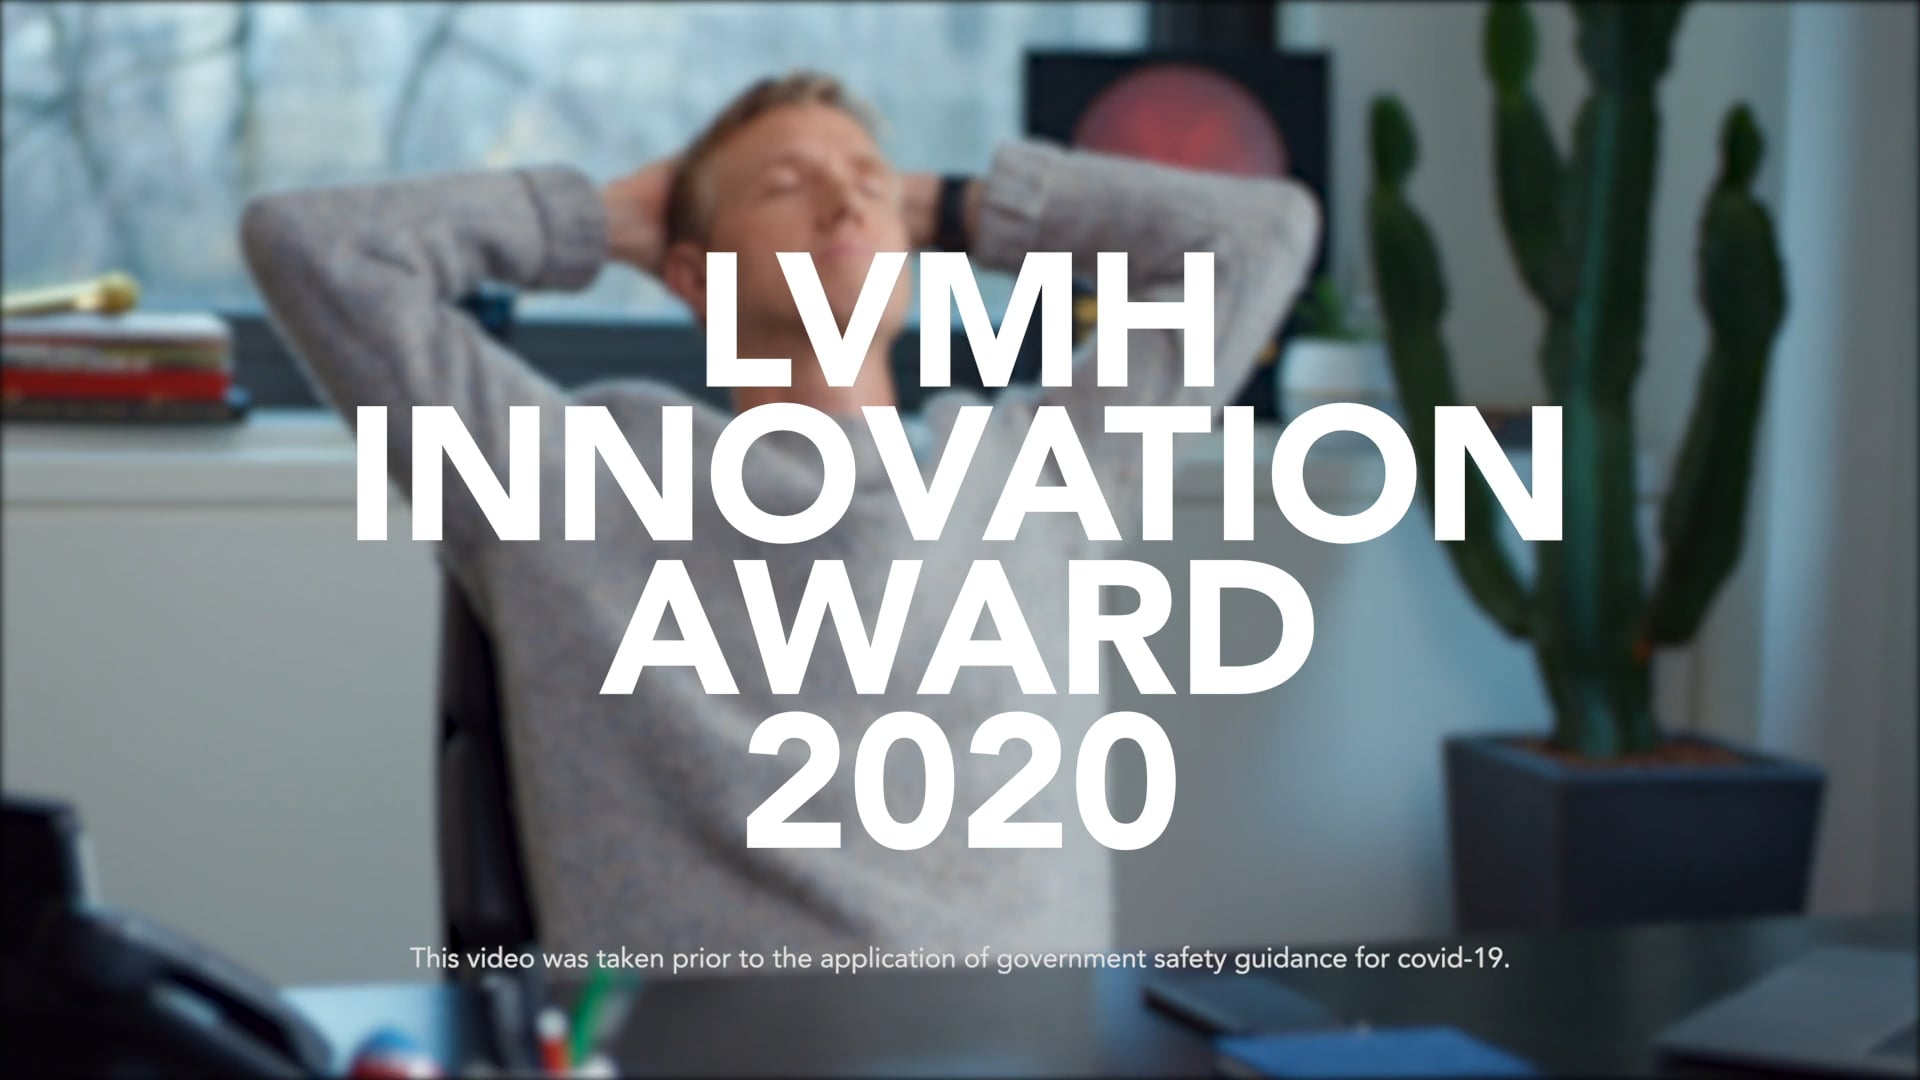 LVMH Innovation Award Episode 3 The Proposal [MASTER] 16-9 on Vimeo